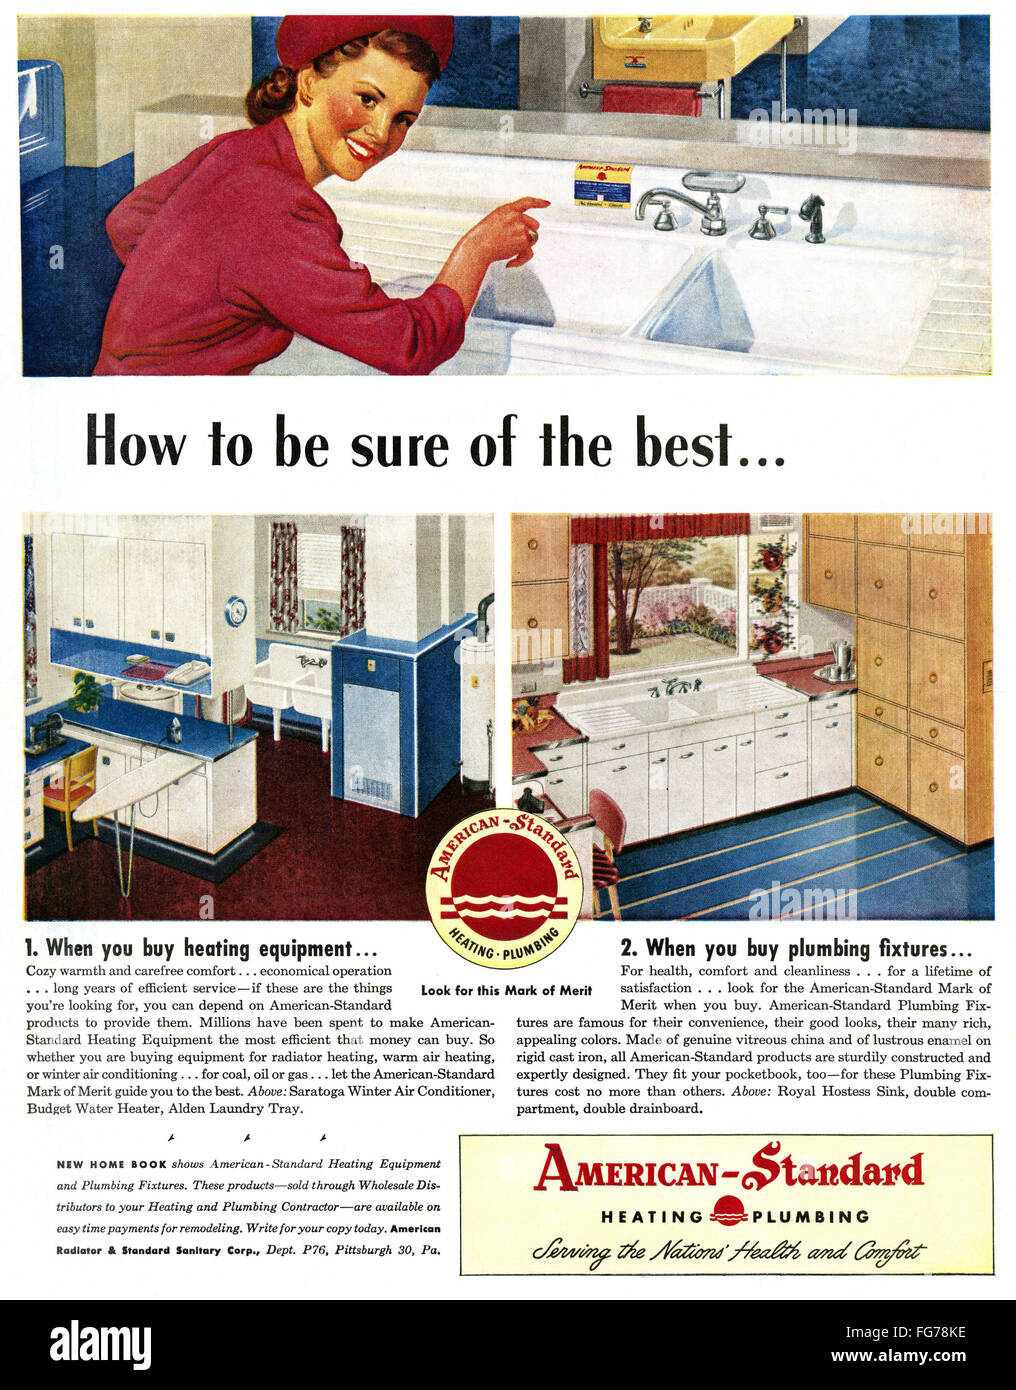 AD: AMERICAN-STANDARD. /nAmerican advertisement for American-Standard Heating and Plumbing, 1947. Stock Photo